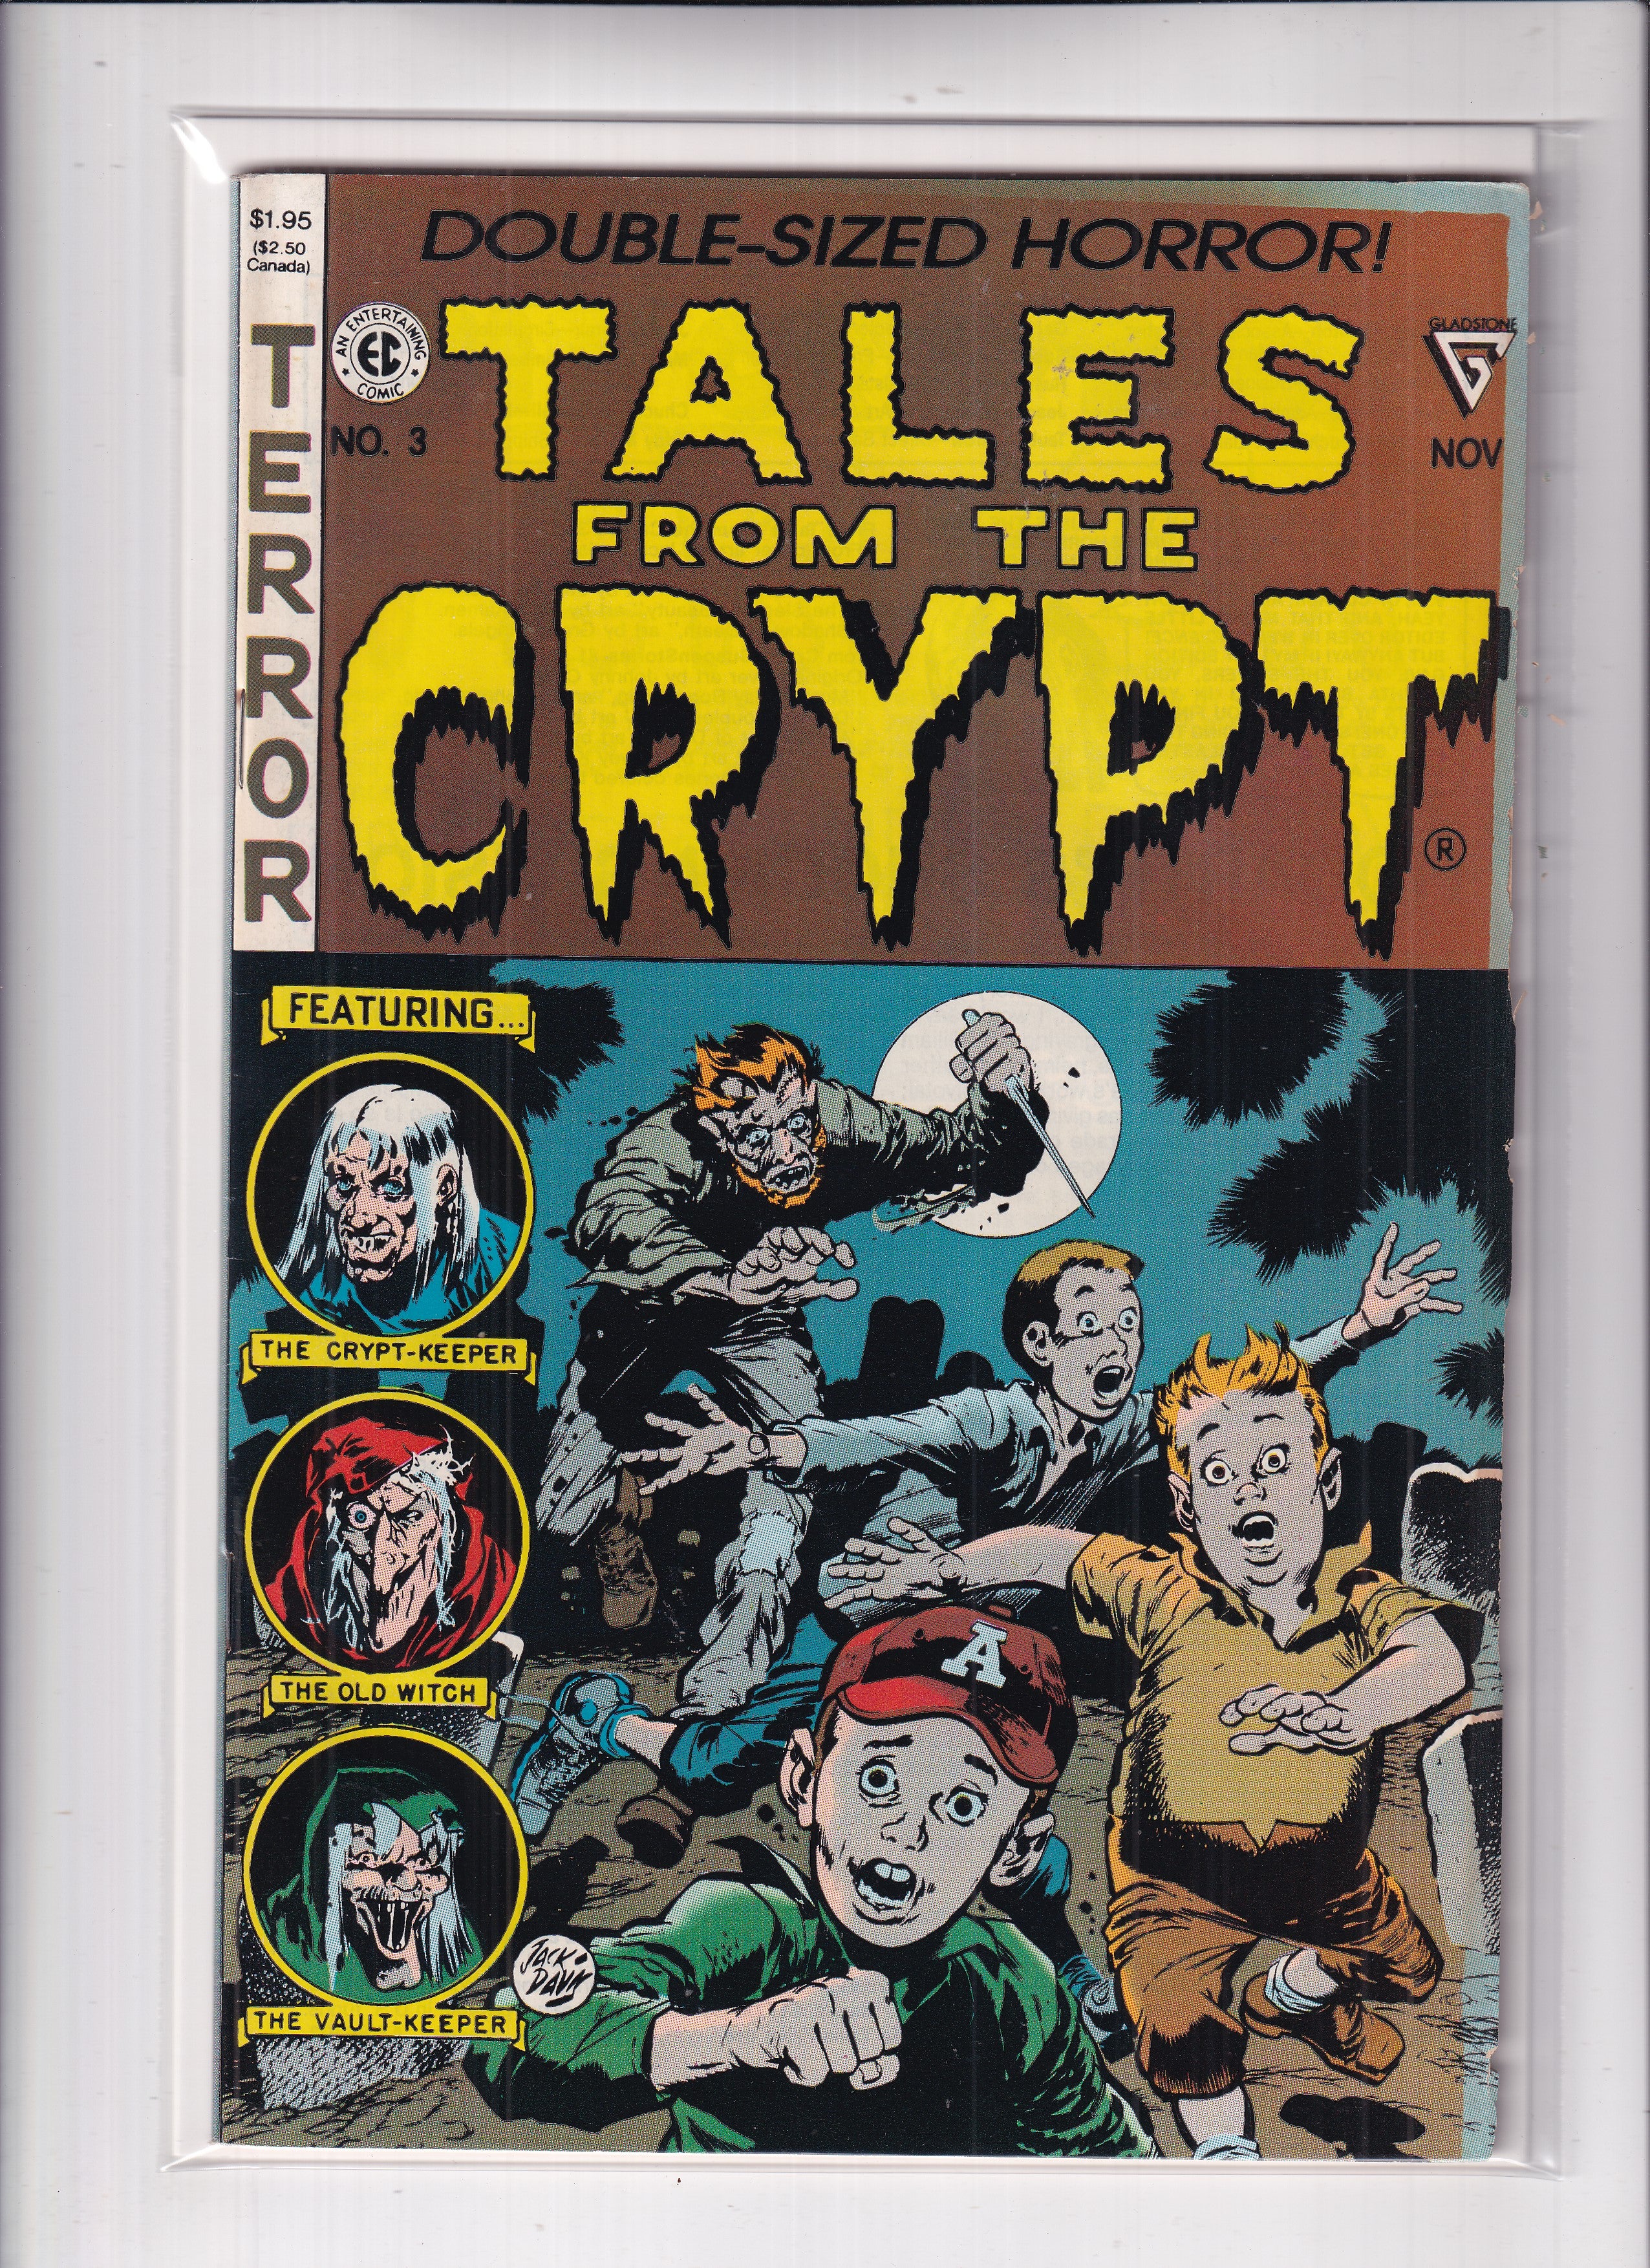 TALES FROM THE CRYPT #3 EC REPRINT - Slab City Comics 